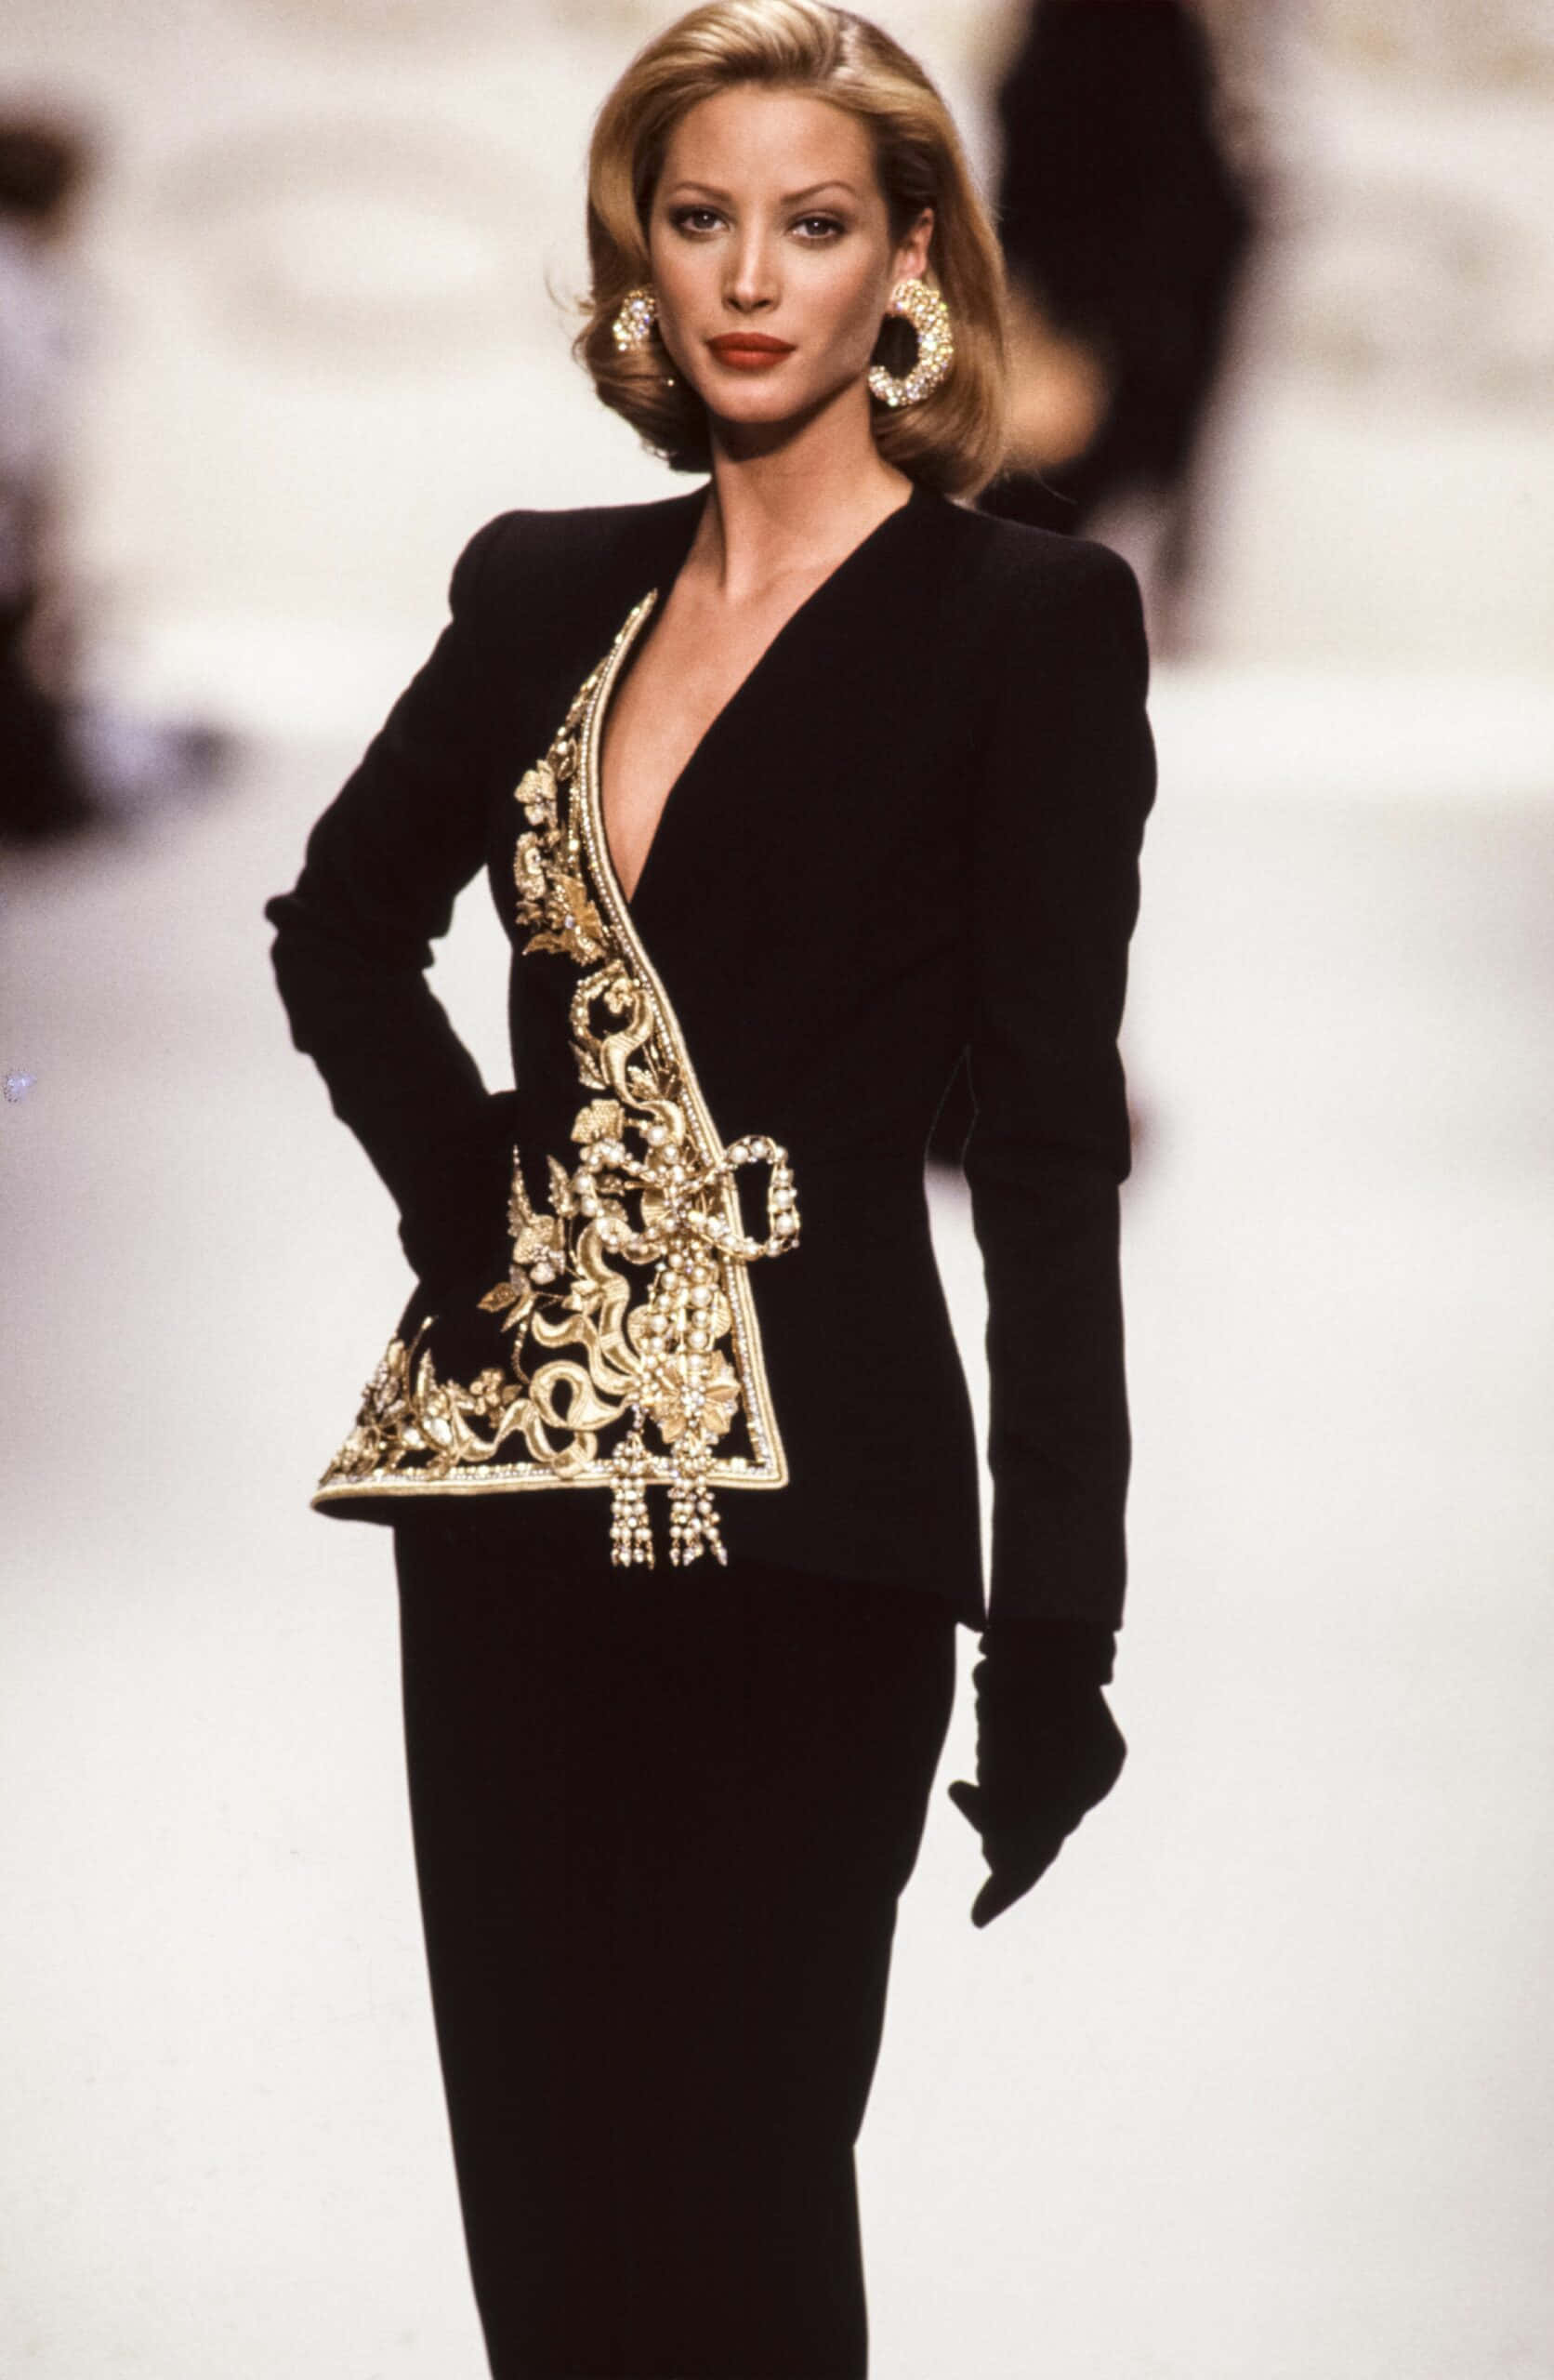 Effortless Elegance: Christy Turlington In Classic Black And White Wallpaper